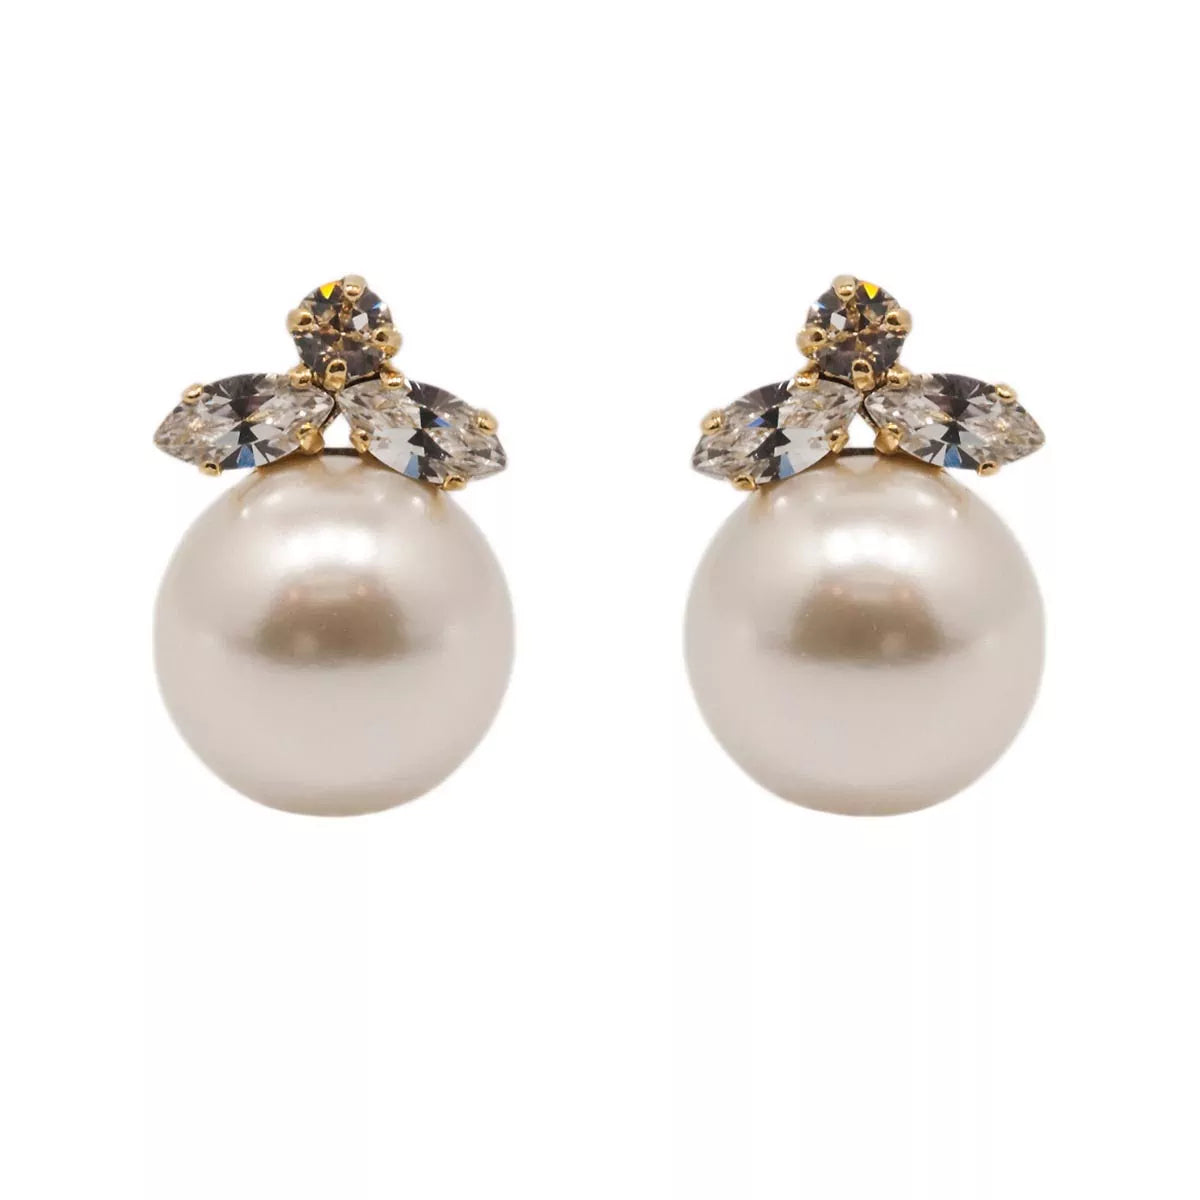 Pearl and crystal earrings